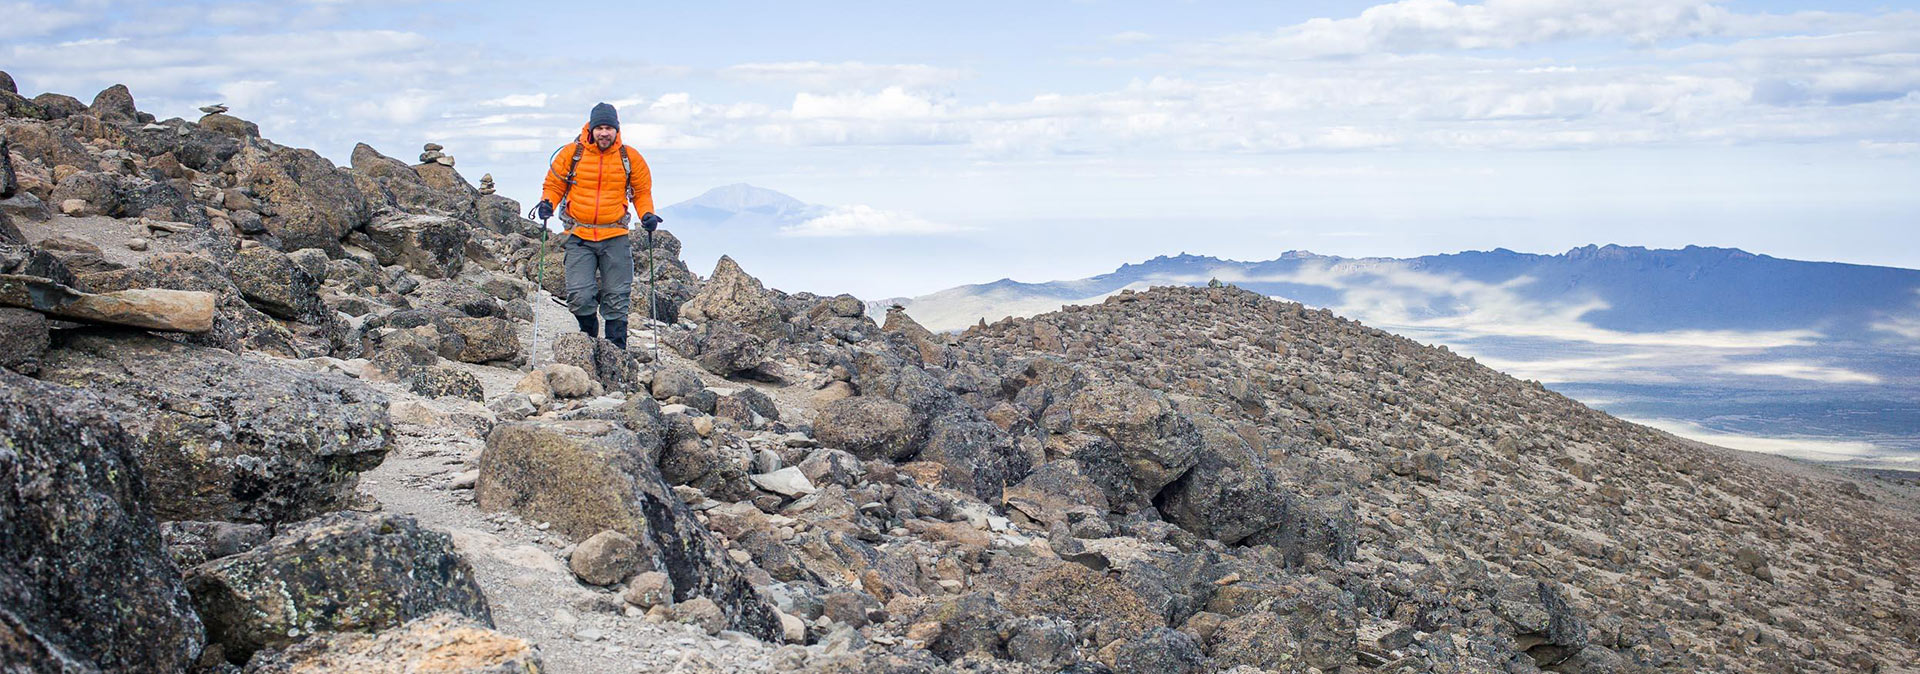 Mount Kilimanjaro Safety with Kilimanjaro Trails